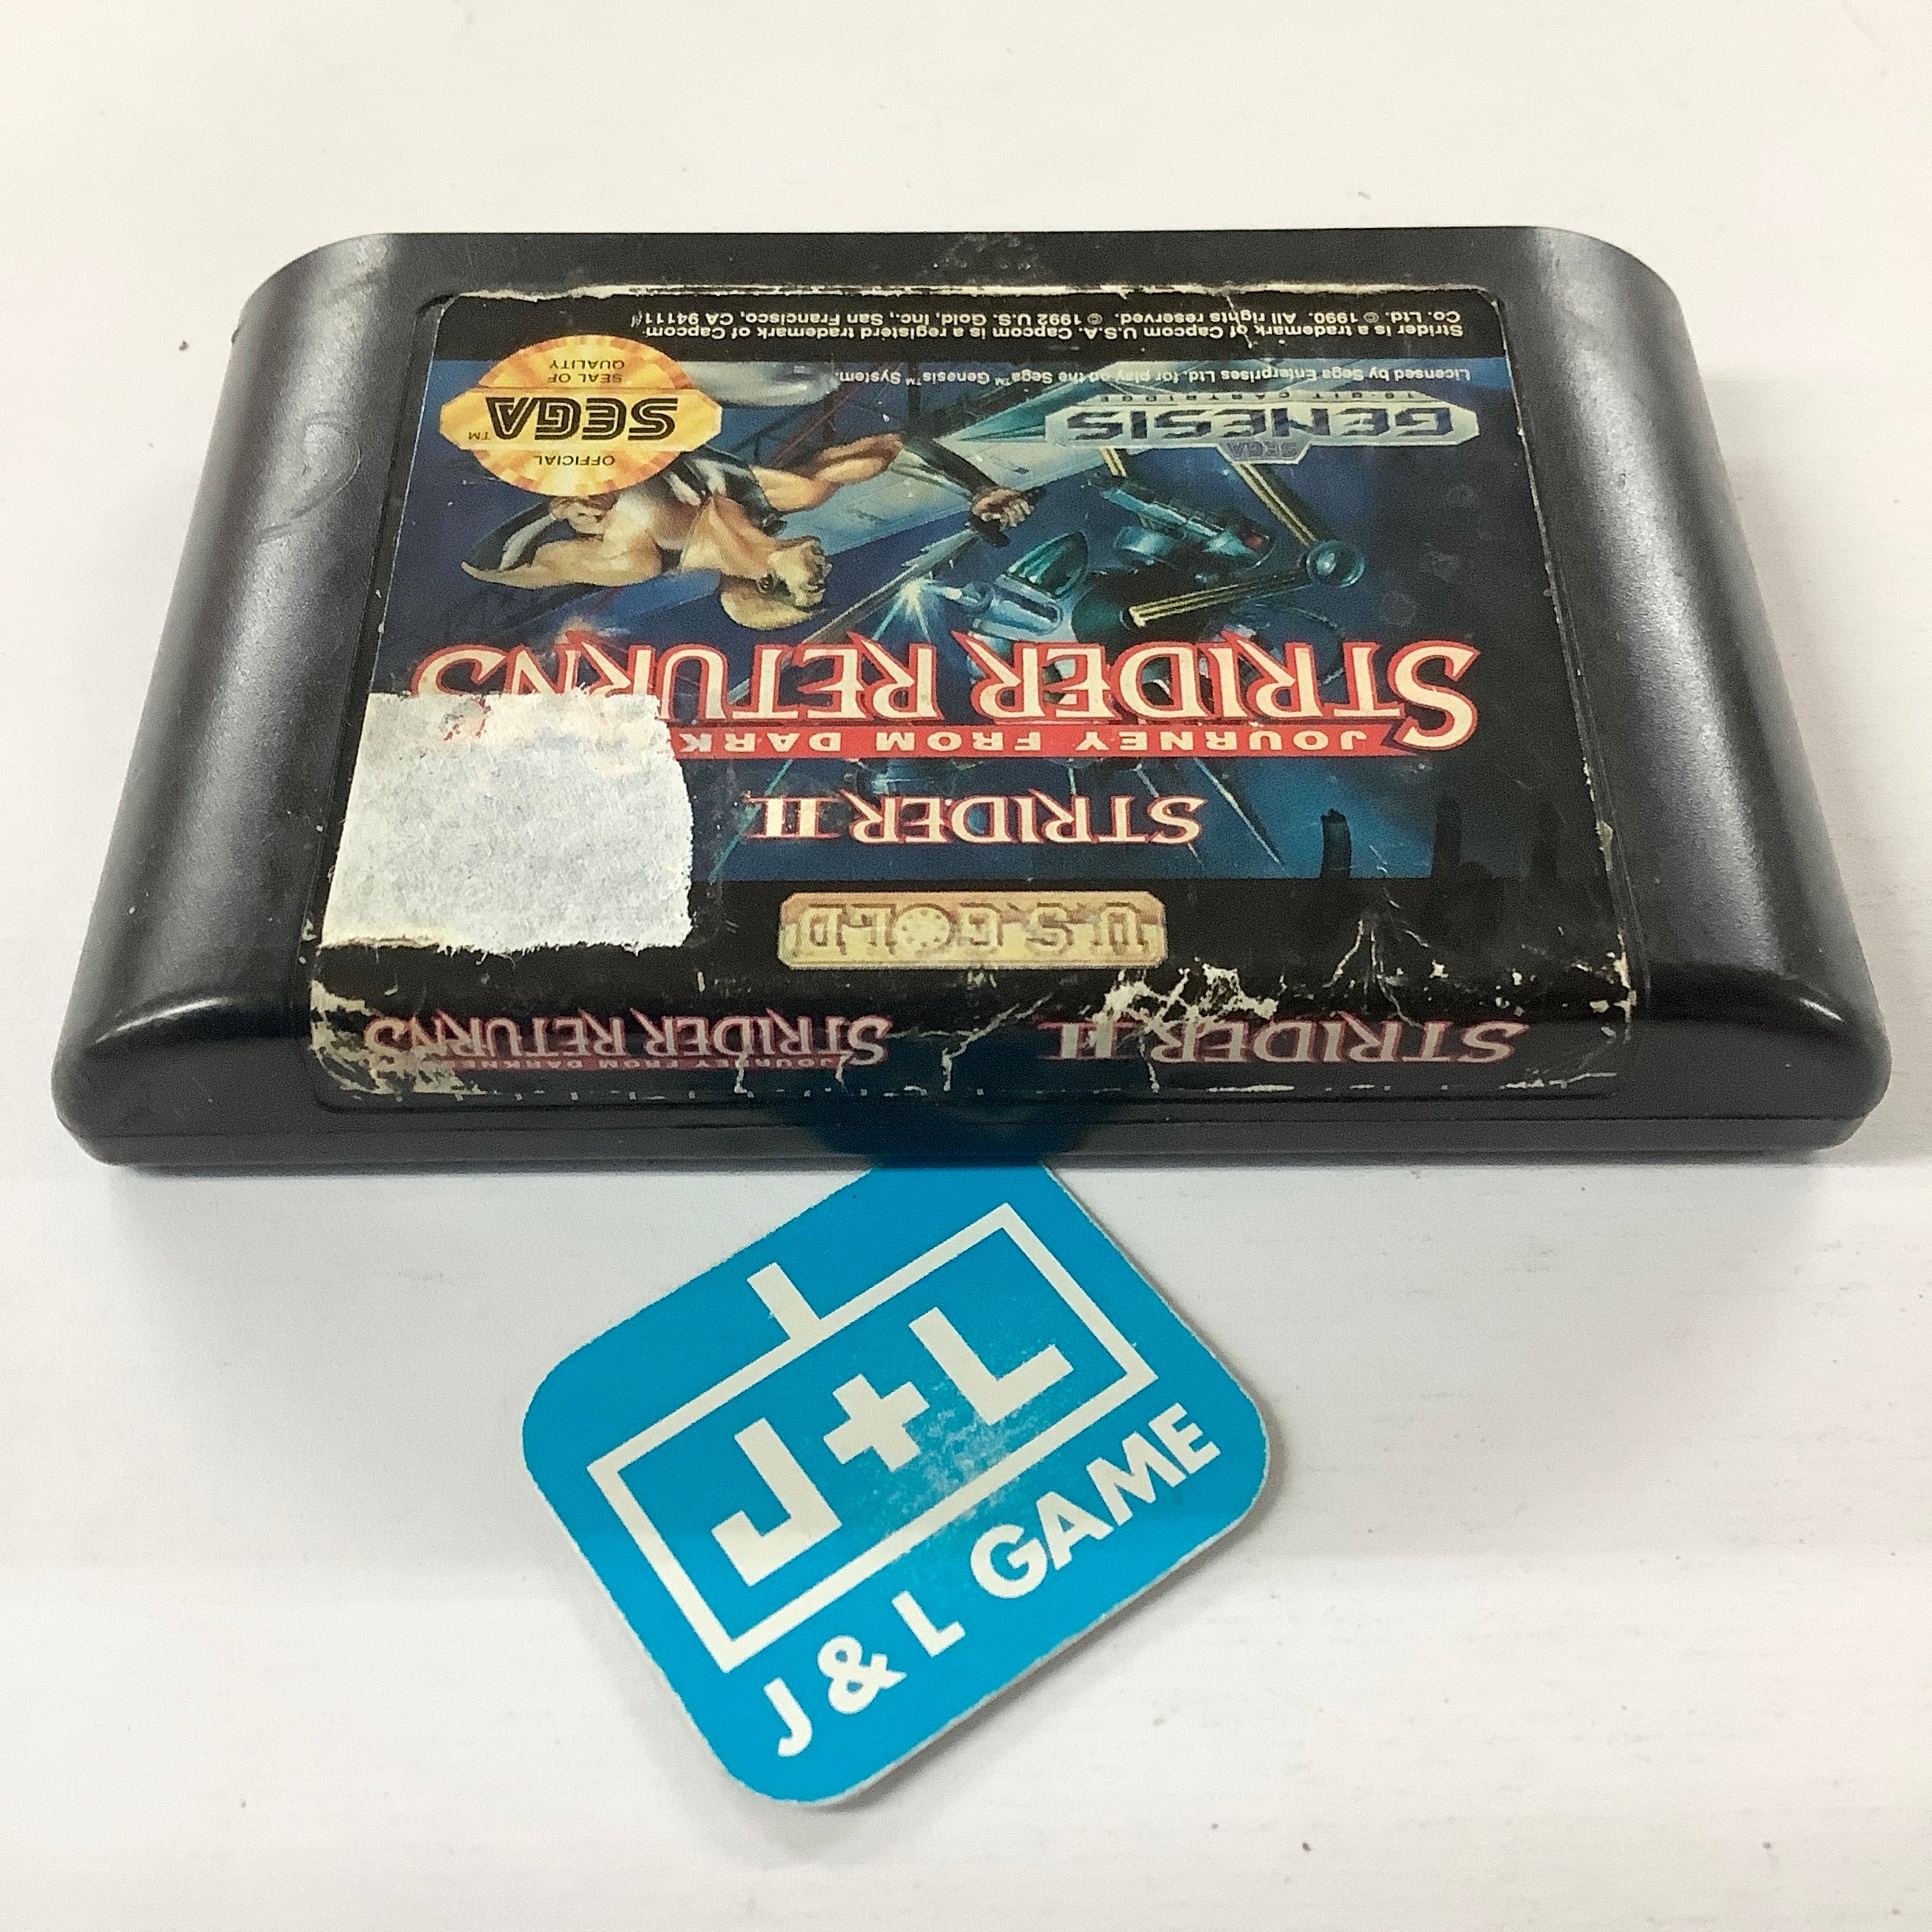 Strider II Journey from Darkness - (SG) SEGA Genesis [Pre-Owned] Video Games U.S. Gold   